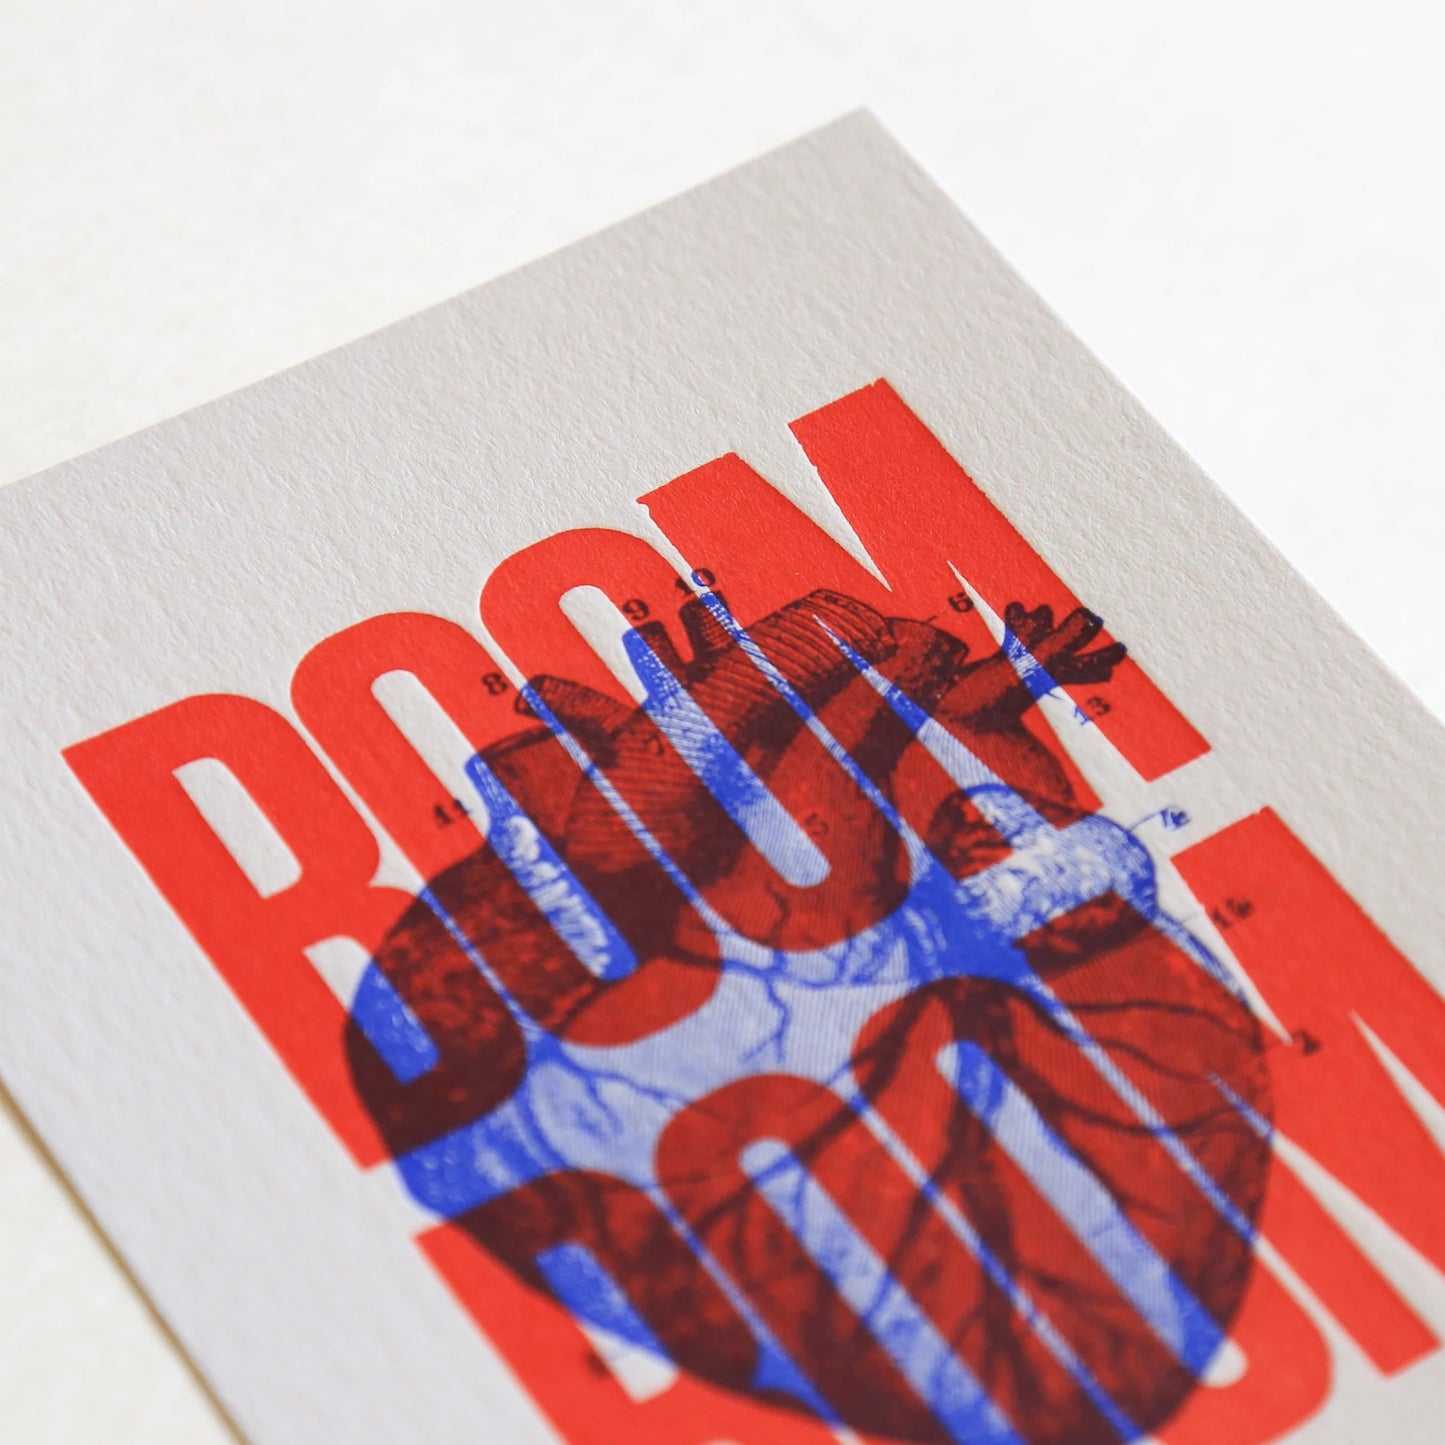 Letterpress card | Boom boom red